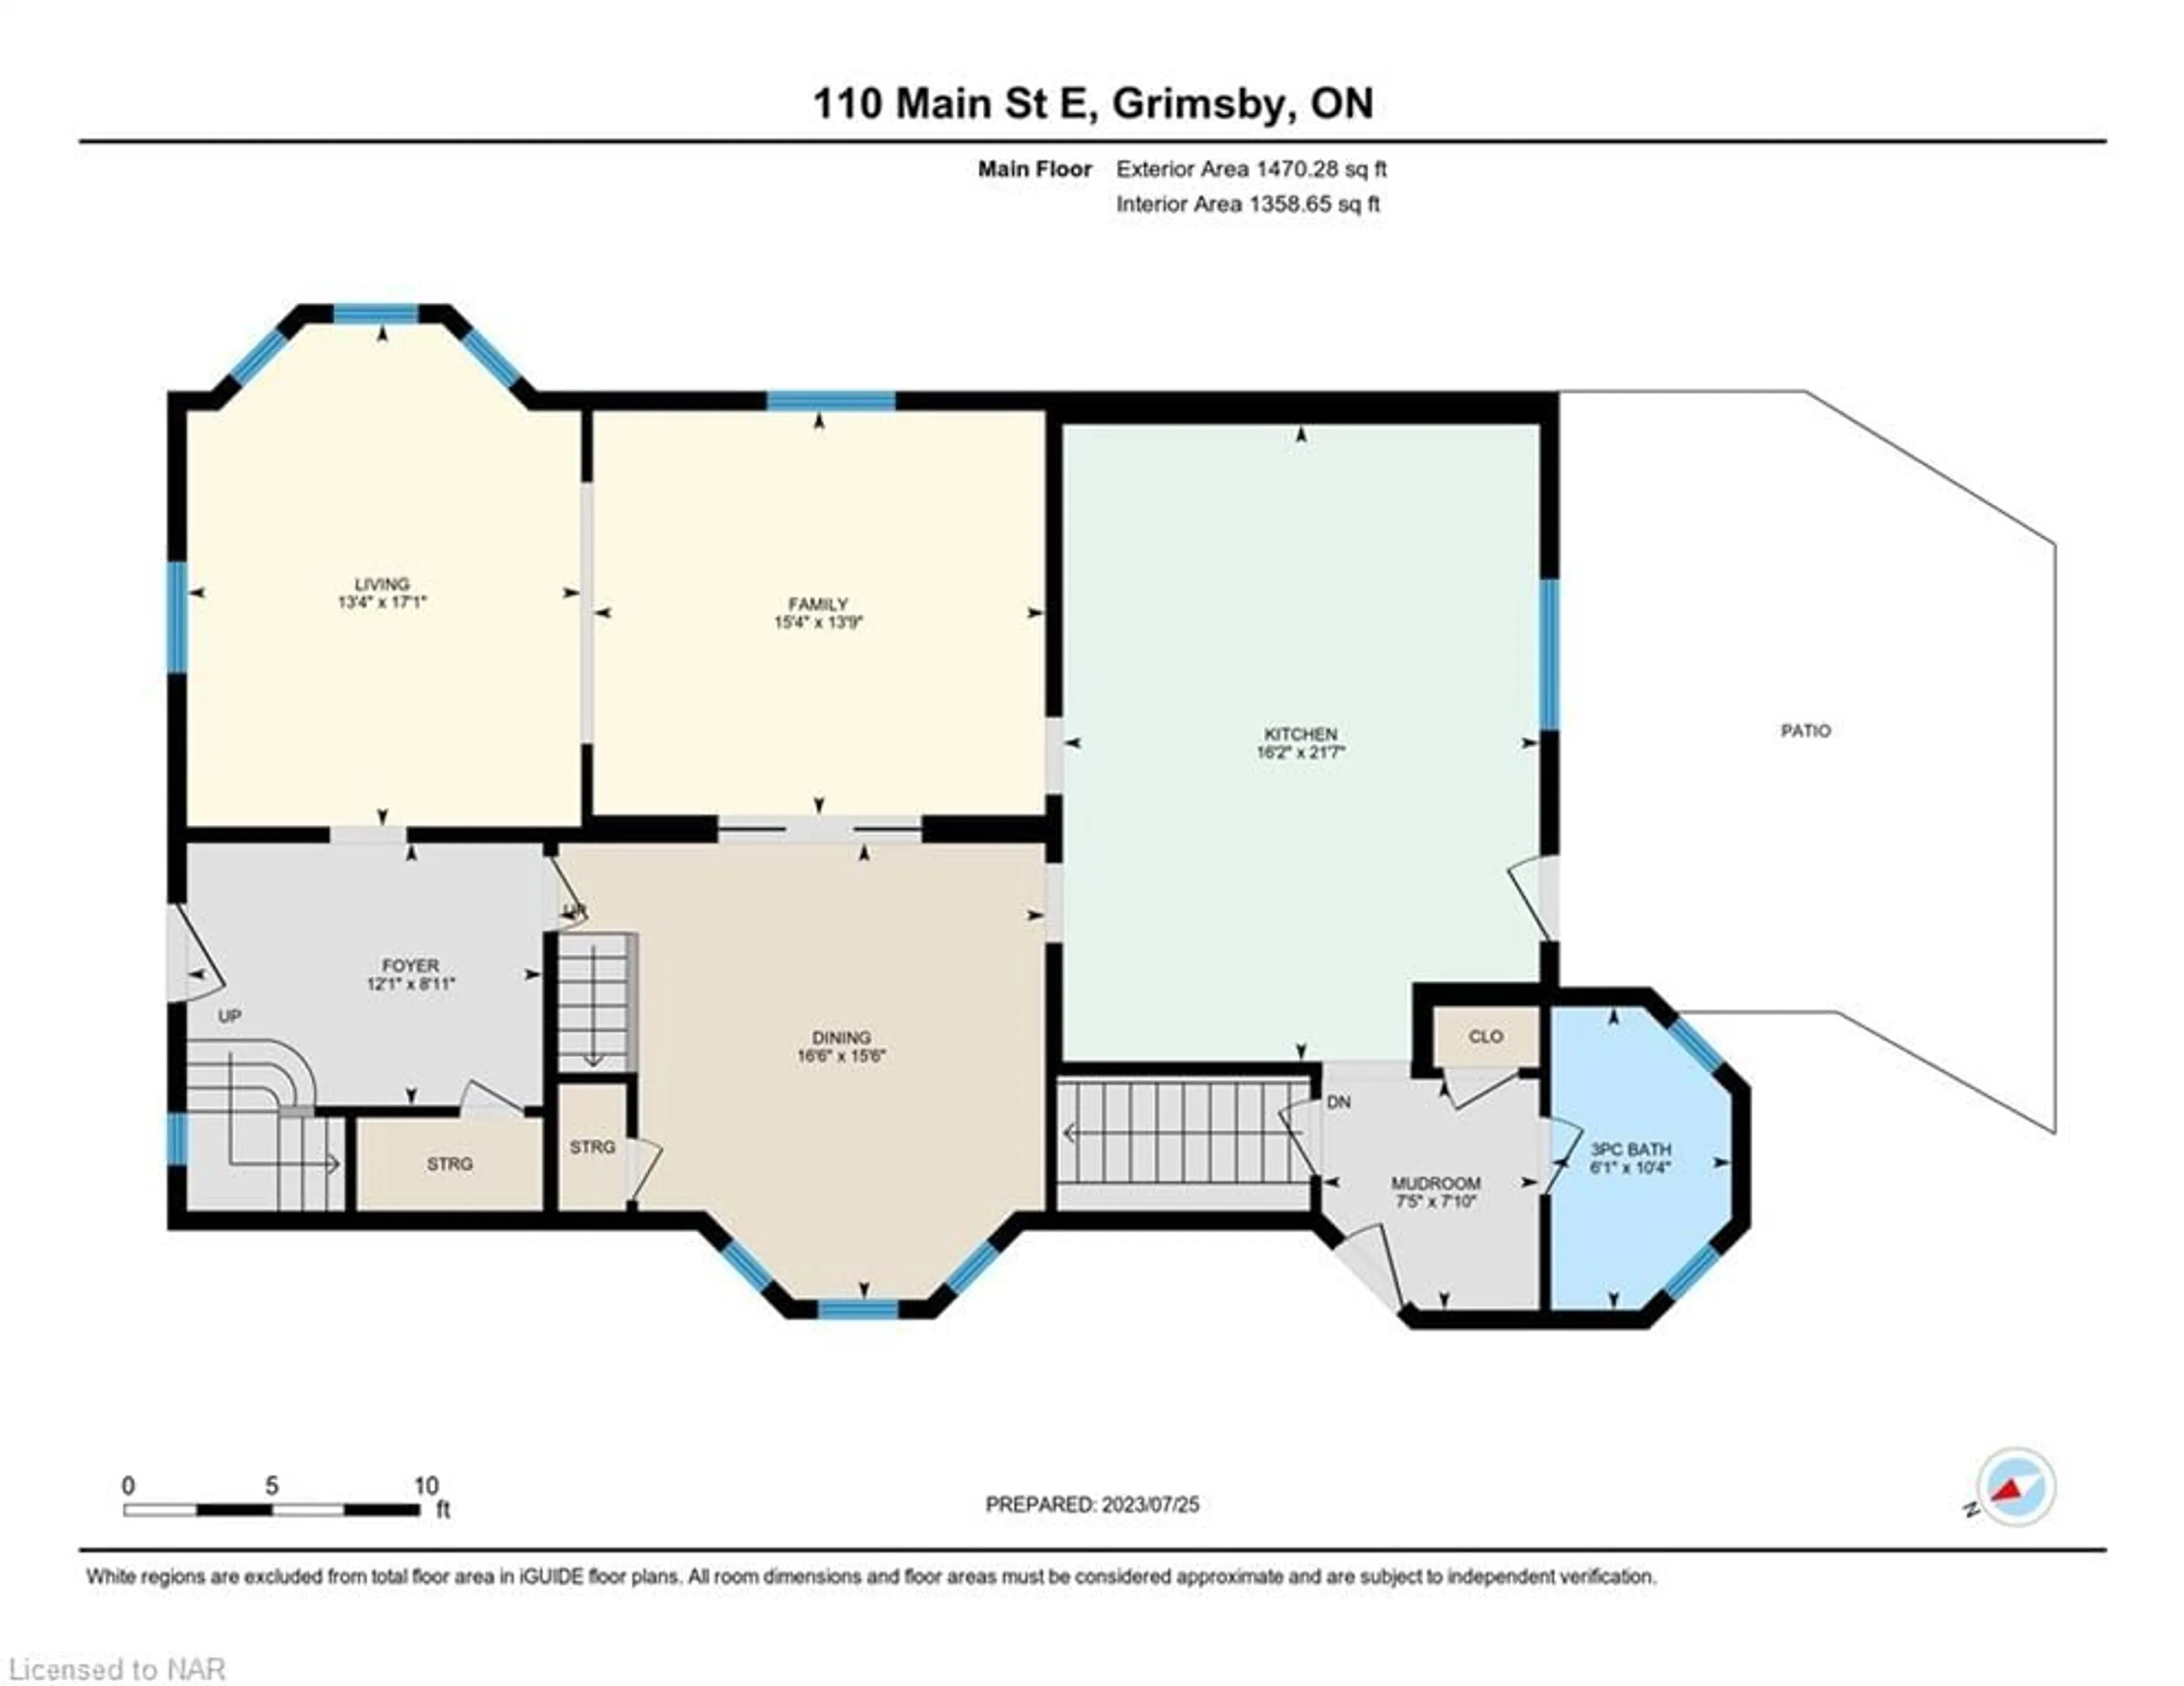 Floor plan for 110 Main St, Grimsby Ontario L3M 1N8